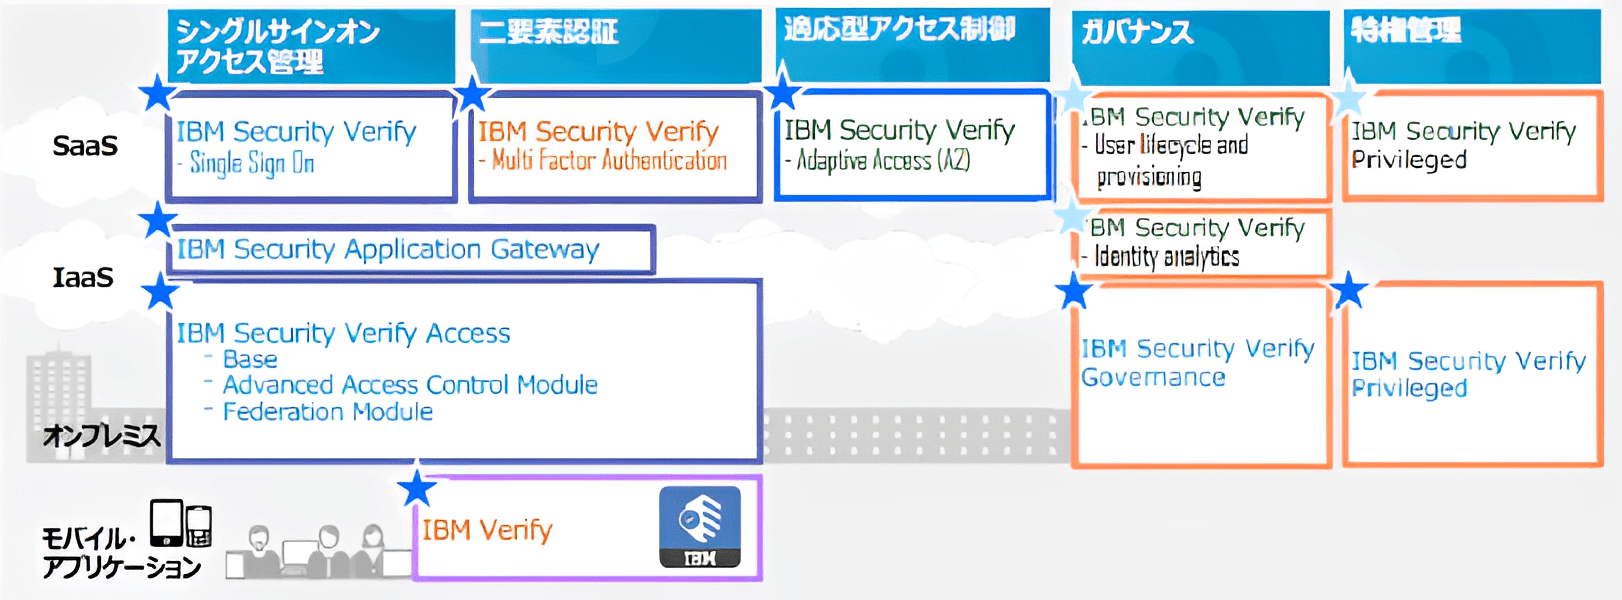 IBM Security Verify概要